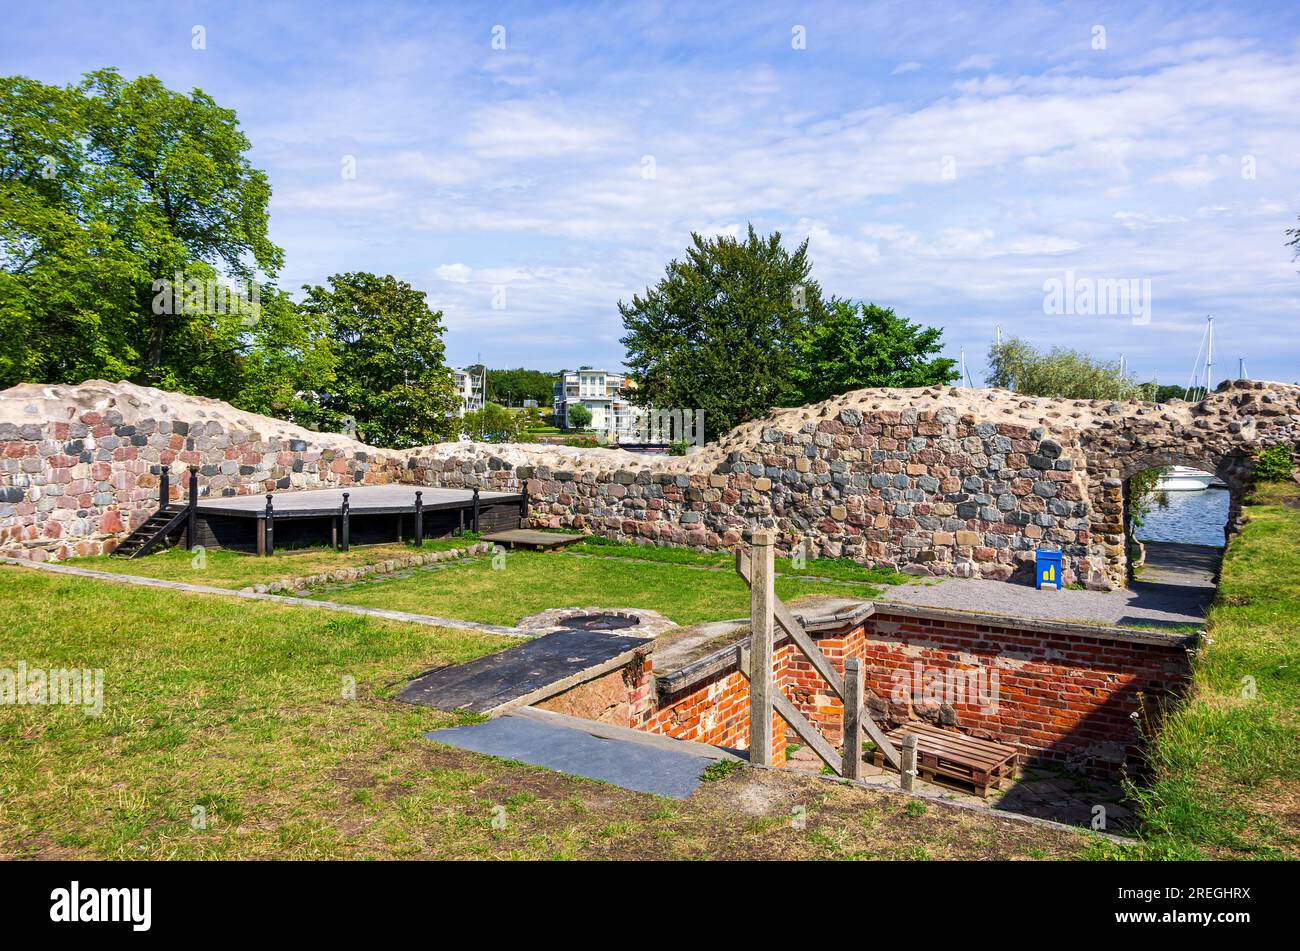 Resti delle rovine del castello di Stegeholm (Stegeholms slottsruin) su Slottsholmen a Västervik, Smaland, Kalmar län, Svezia. Foto Stock